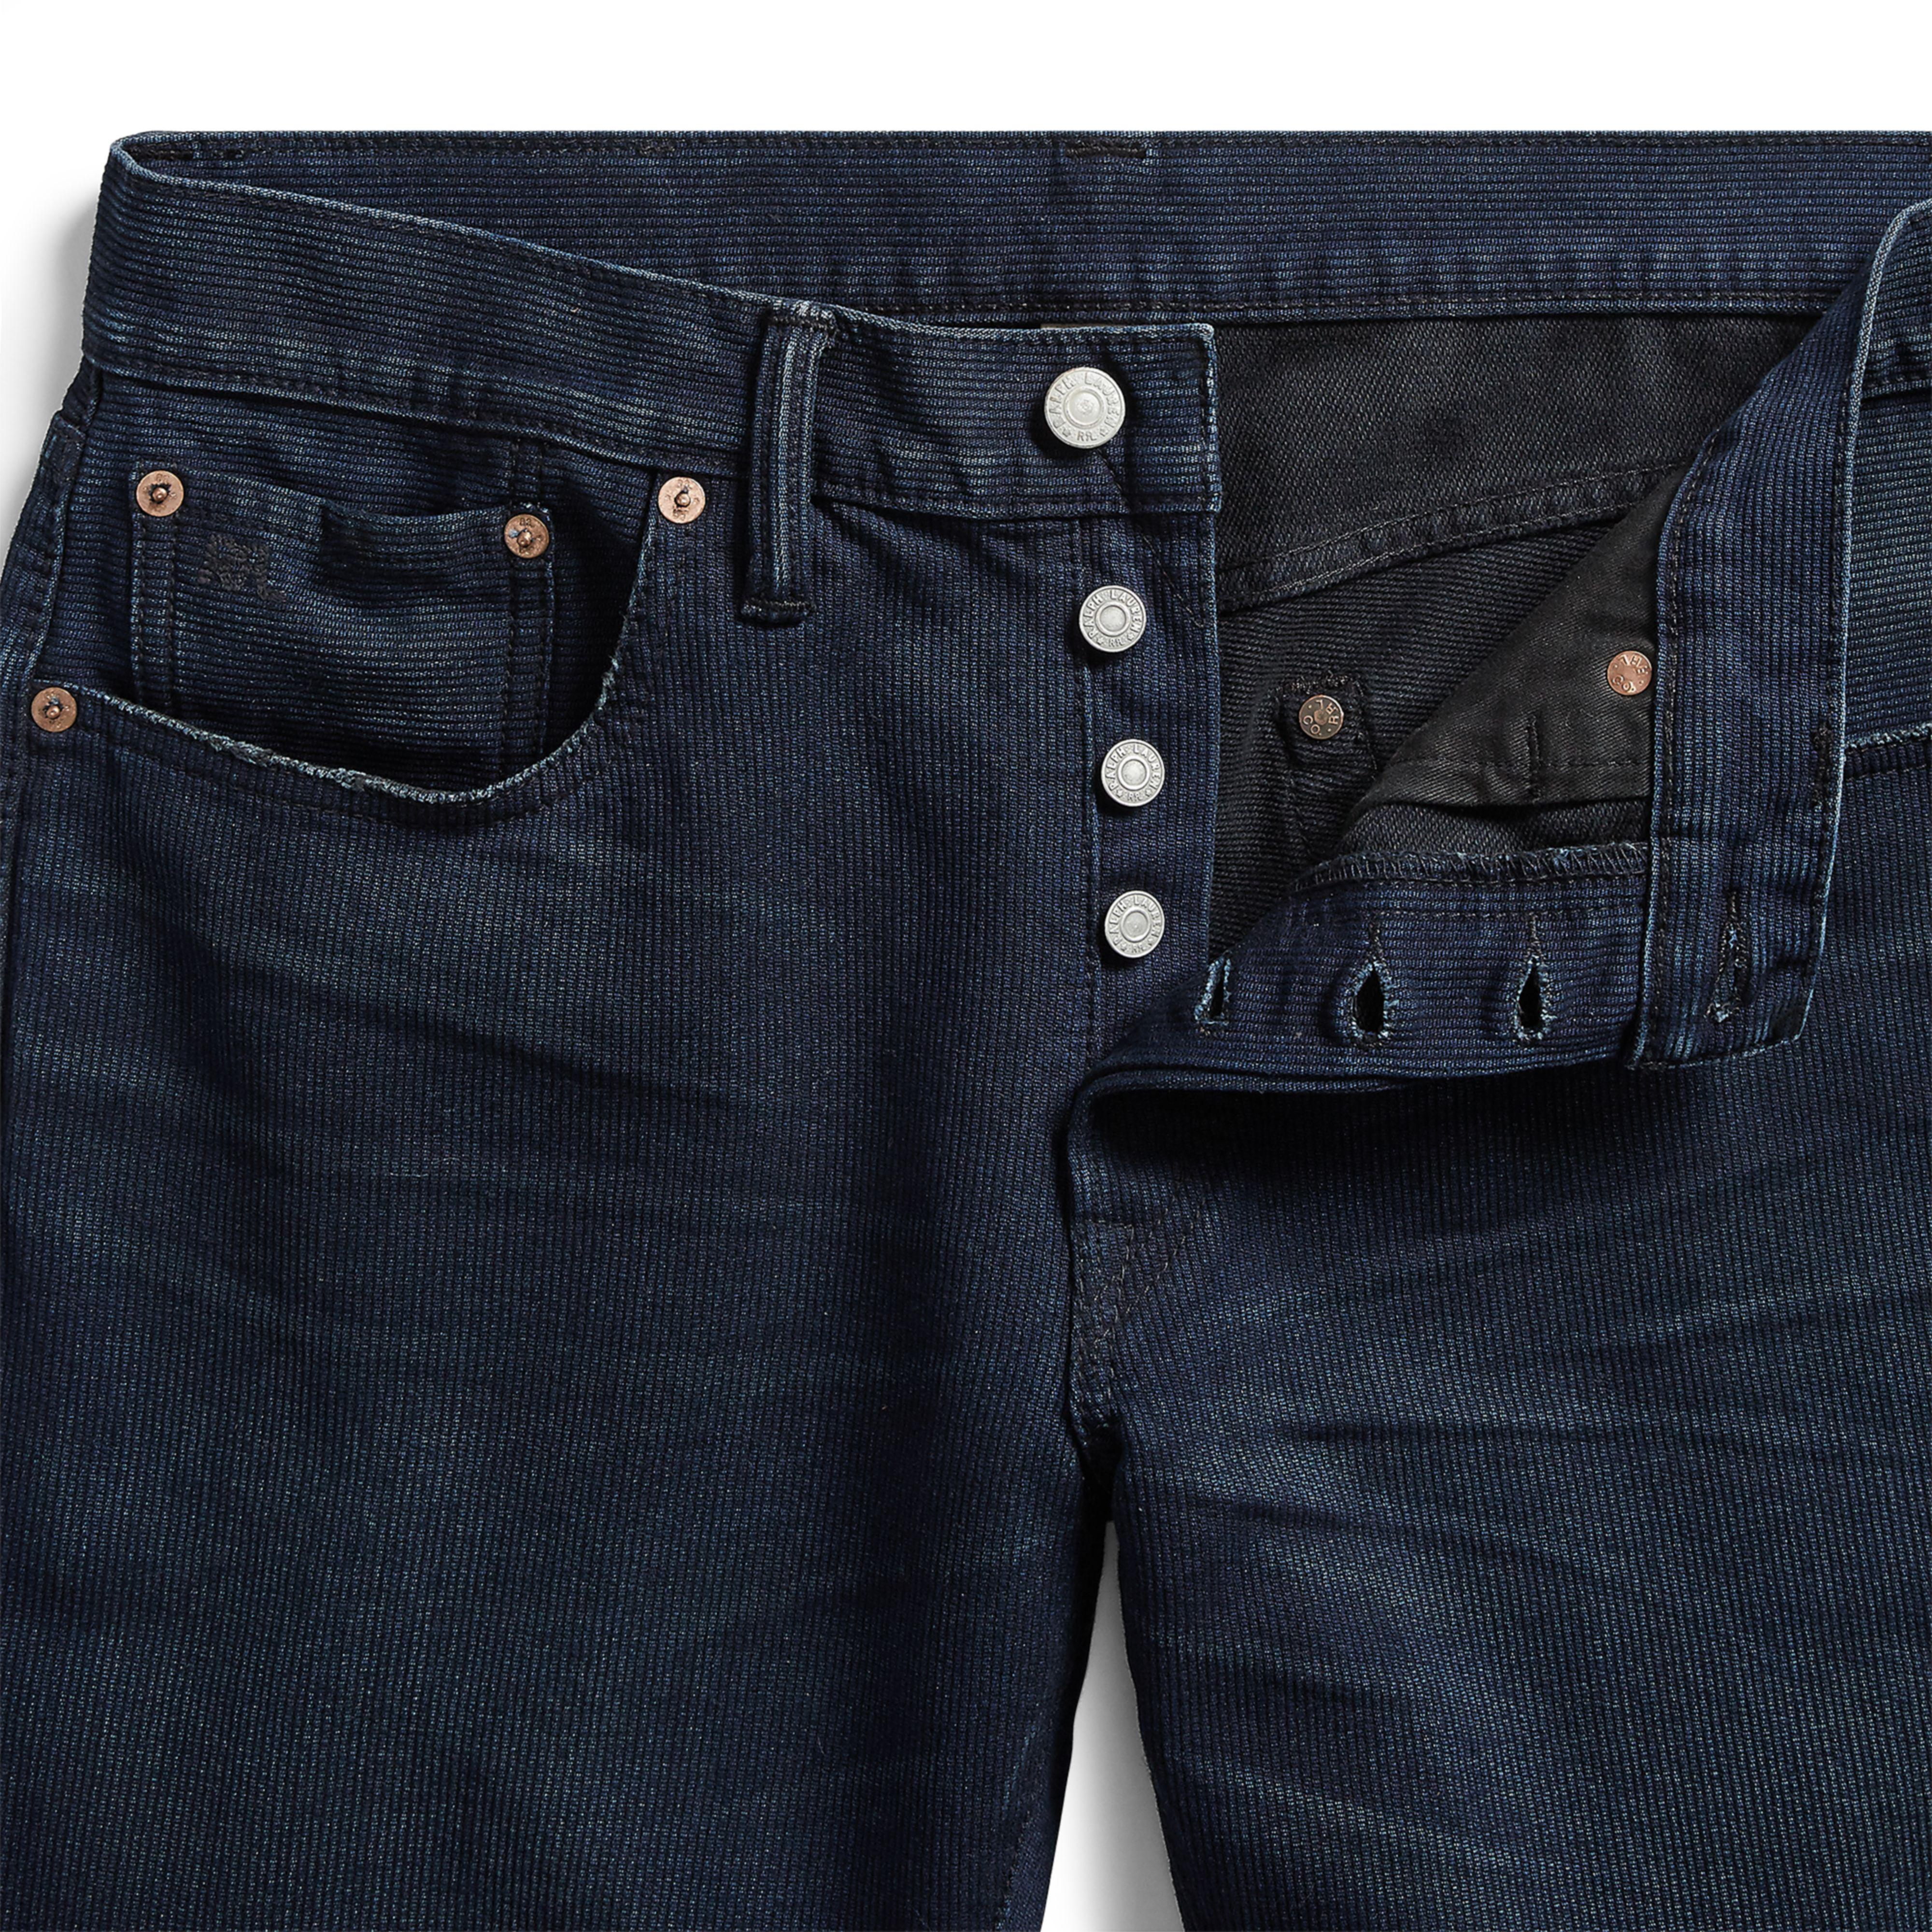 RRL Slim Fit Indigo Corduroy Pant in Dark Wash (Blue) for Men - Lyst